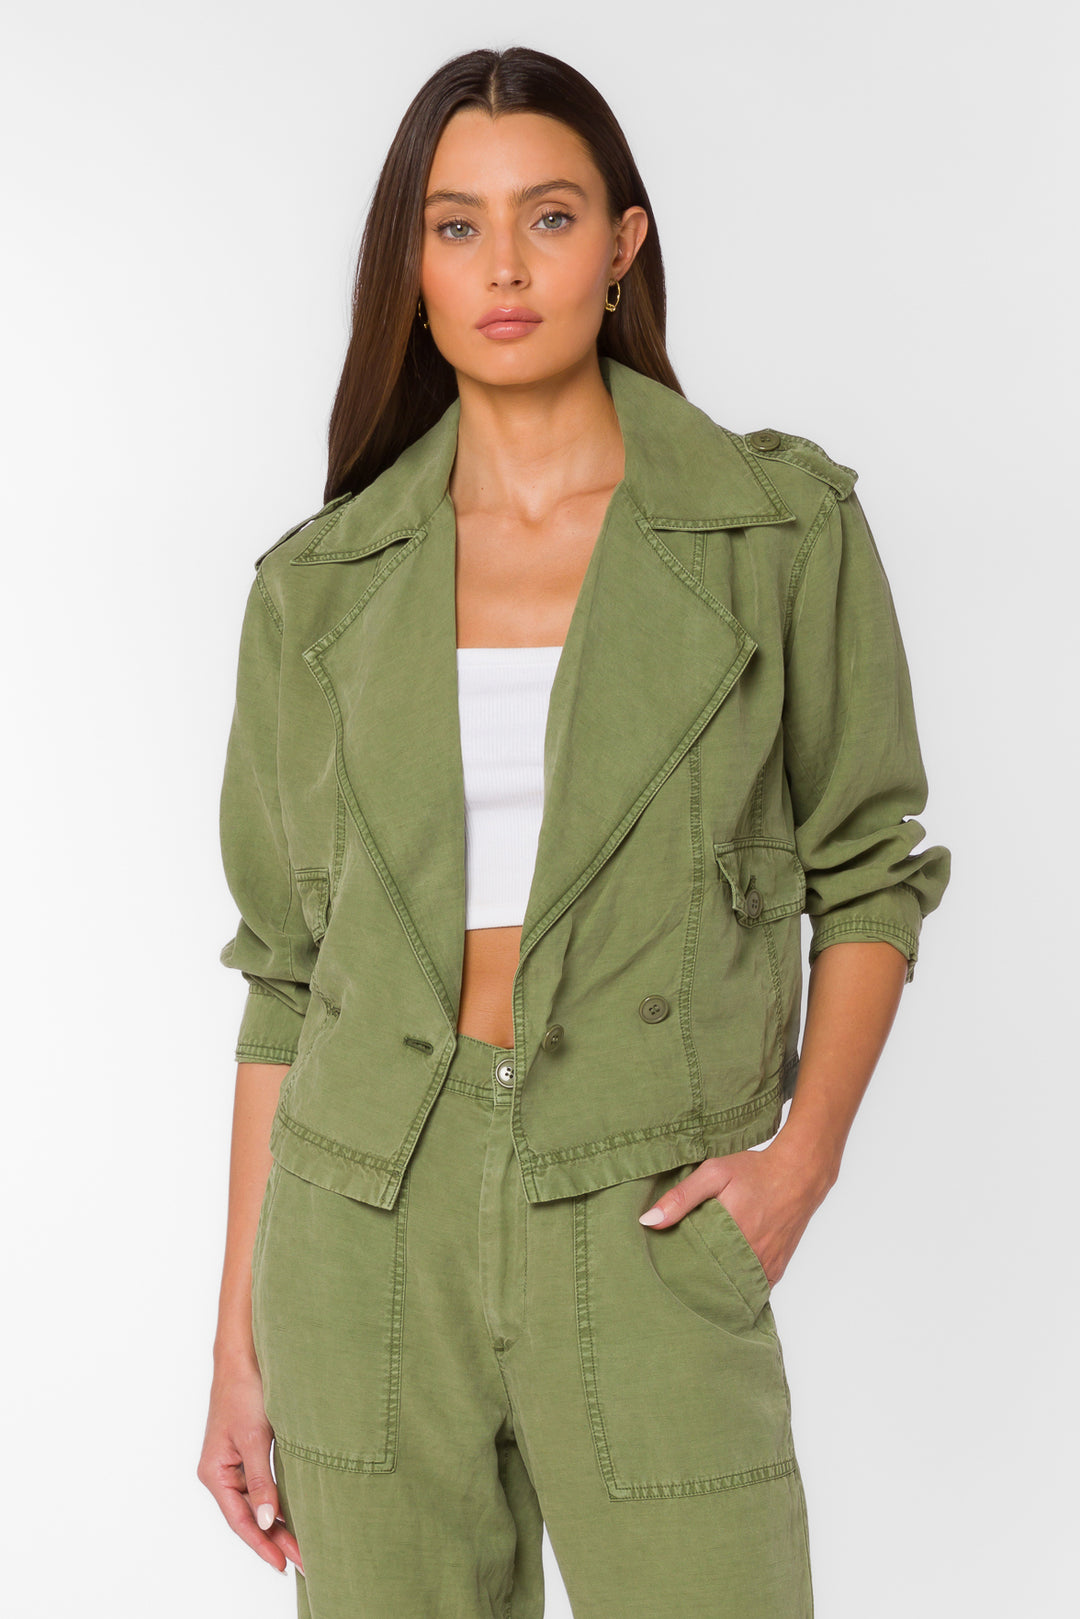 Marley Tea Leaf Jacket - Jackets & Outerwear - Velvet Heart Clothing